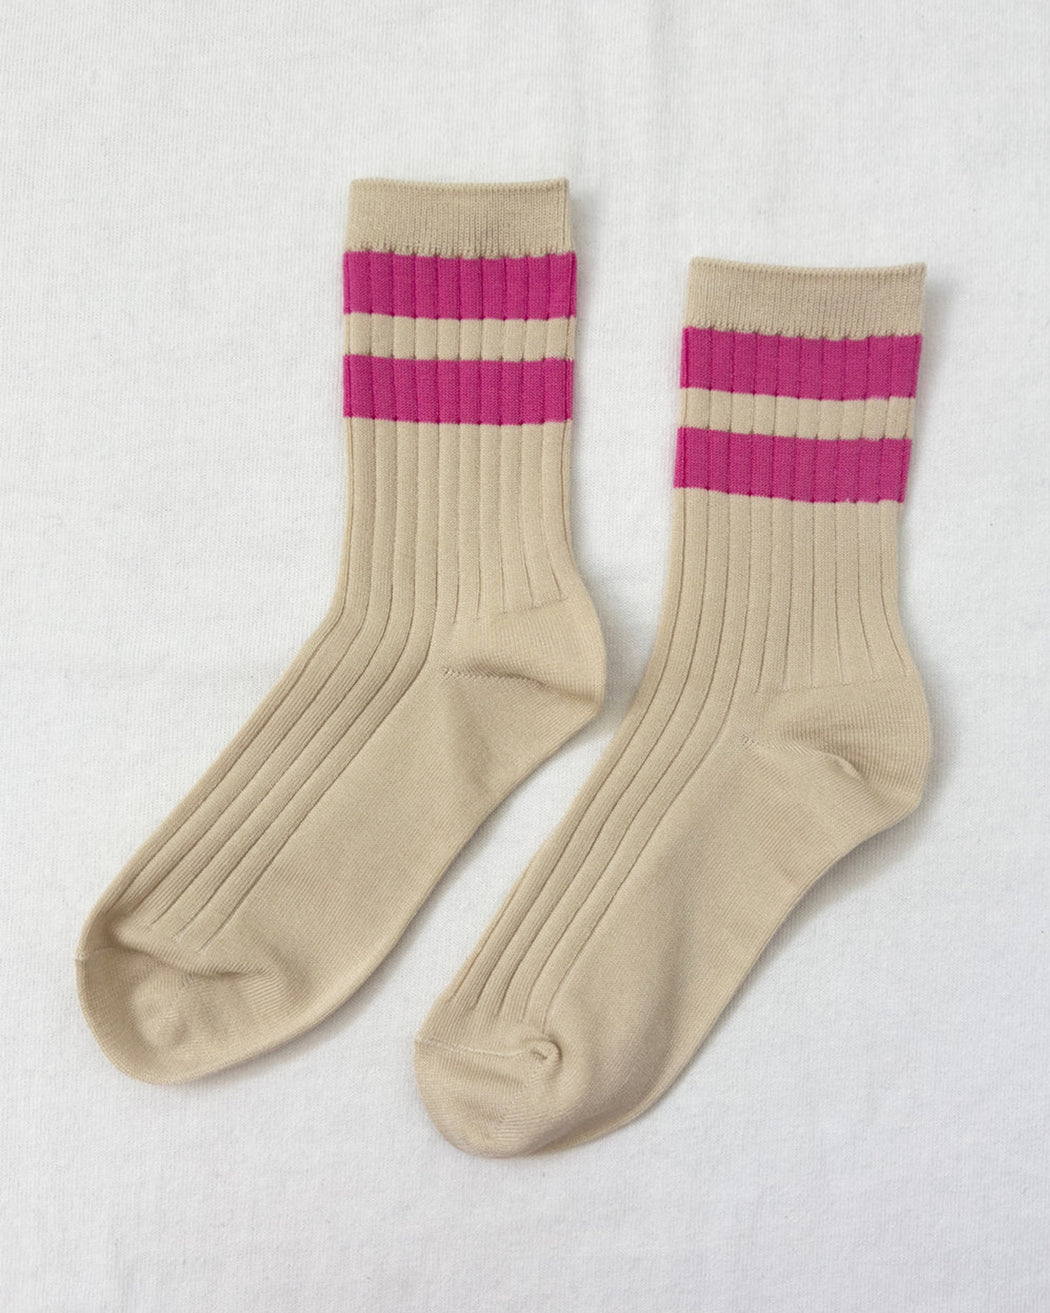 Her Socks – Varsity Taffy